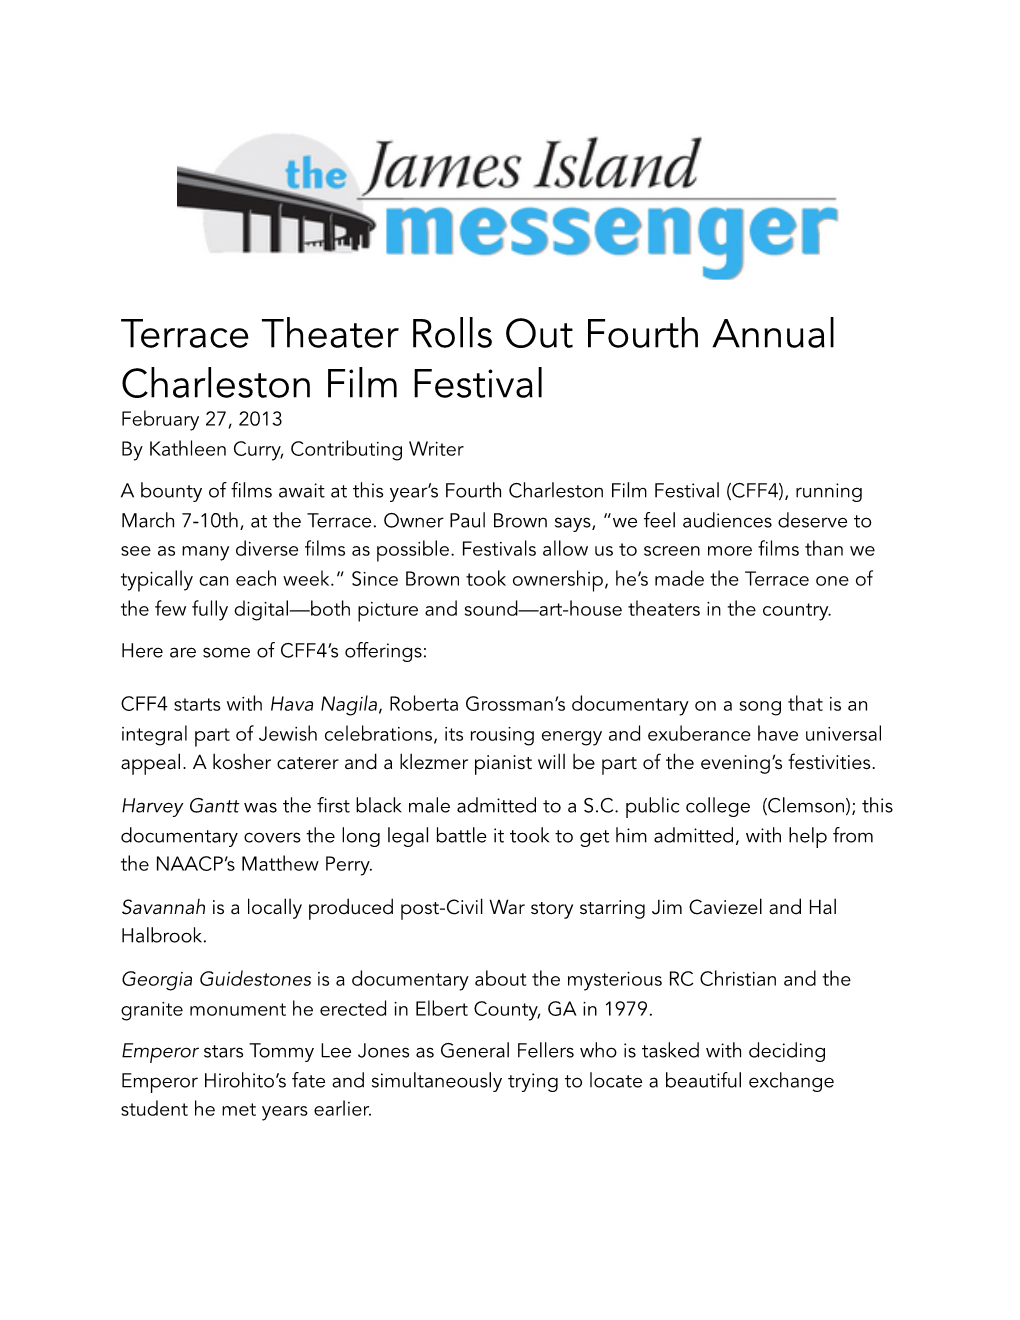 Terrace Theater's Fourth Charleston Film Festival